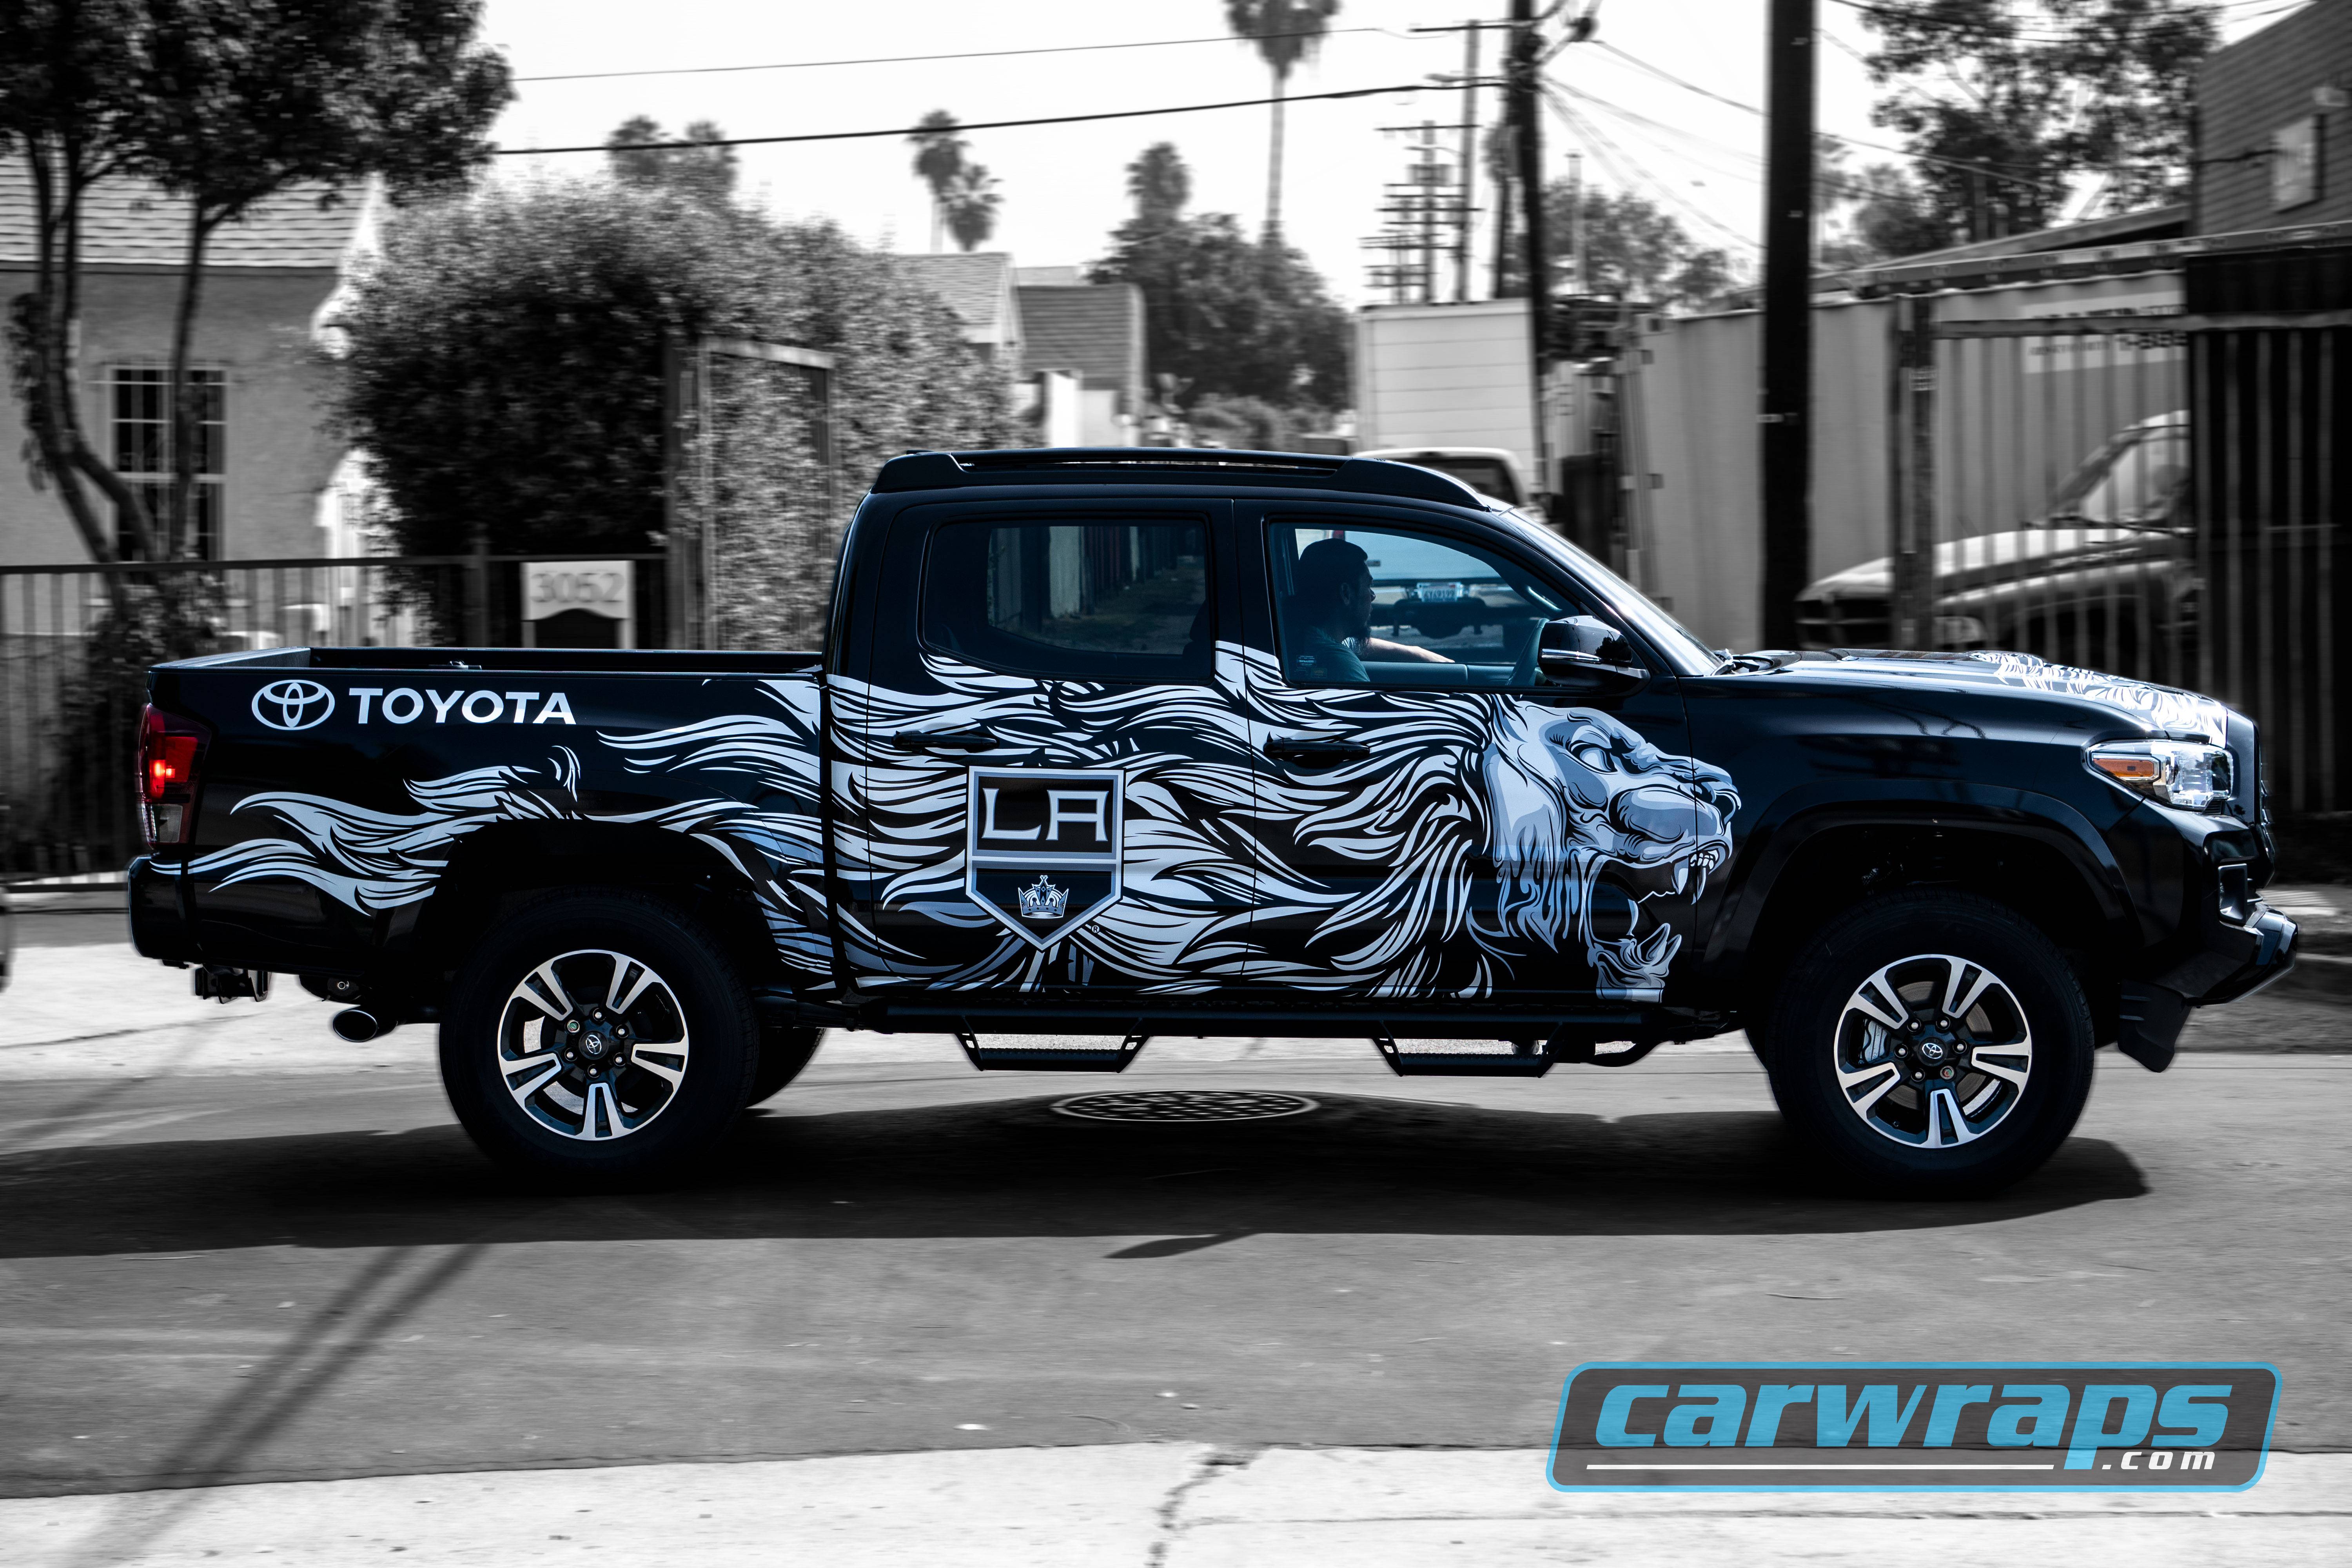 Vehicle Wrap Graphics & Car Wraps Service for Los Angeles, CA